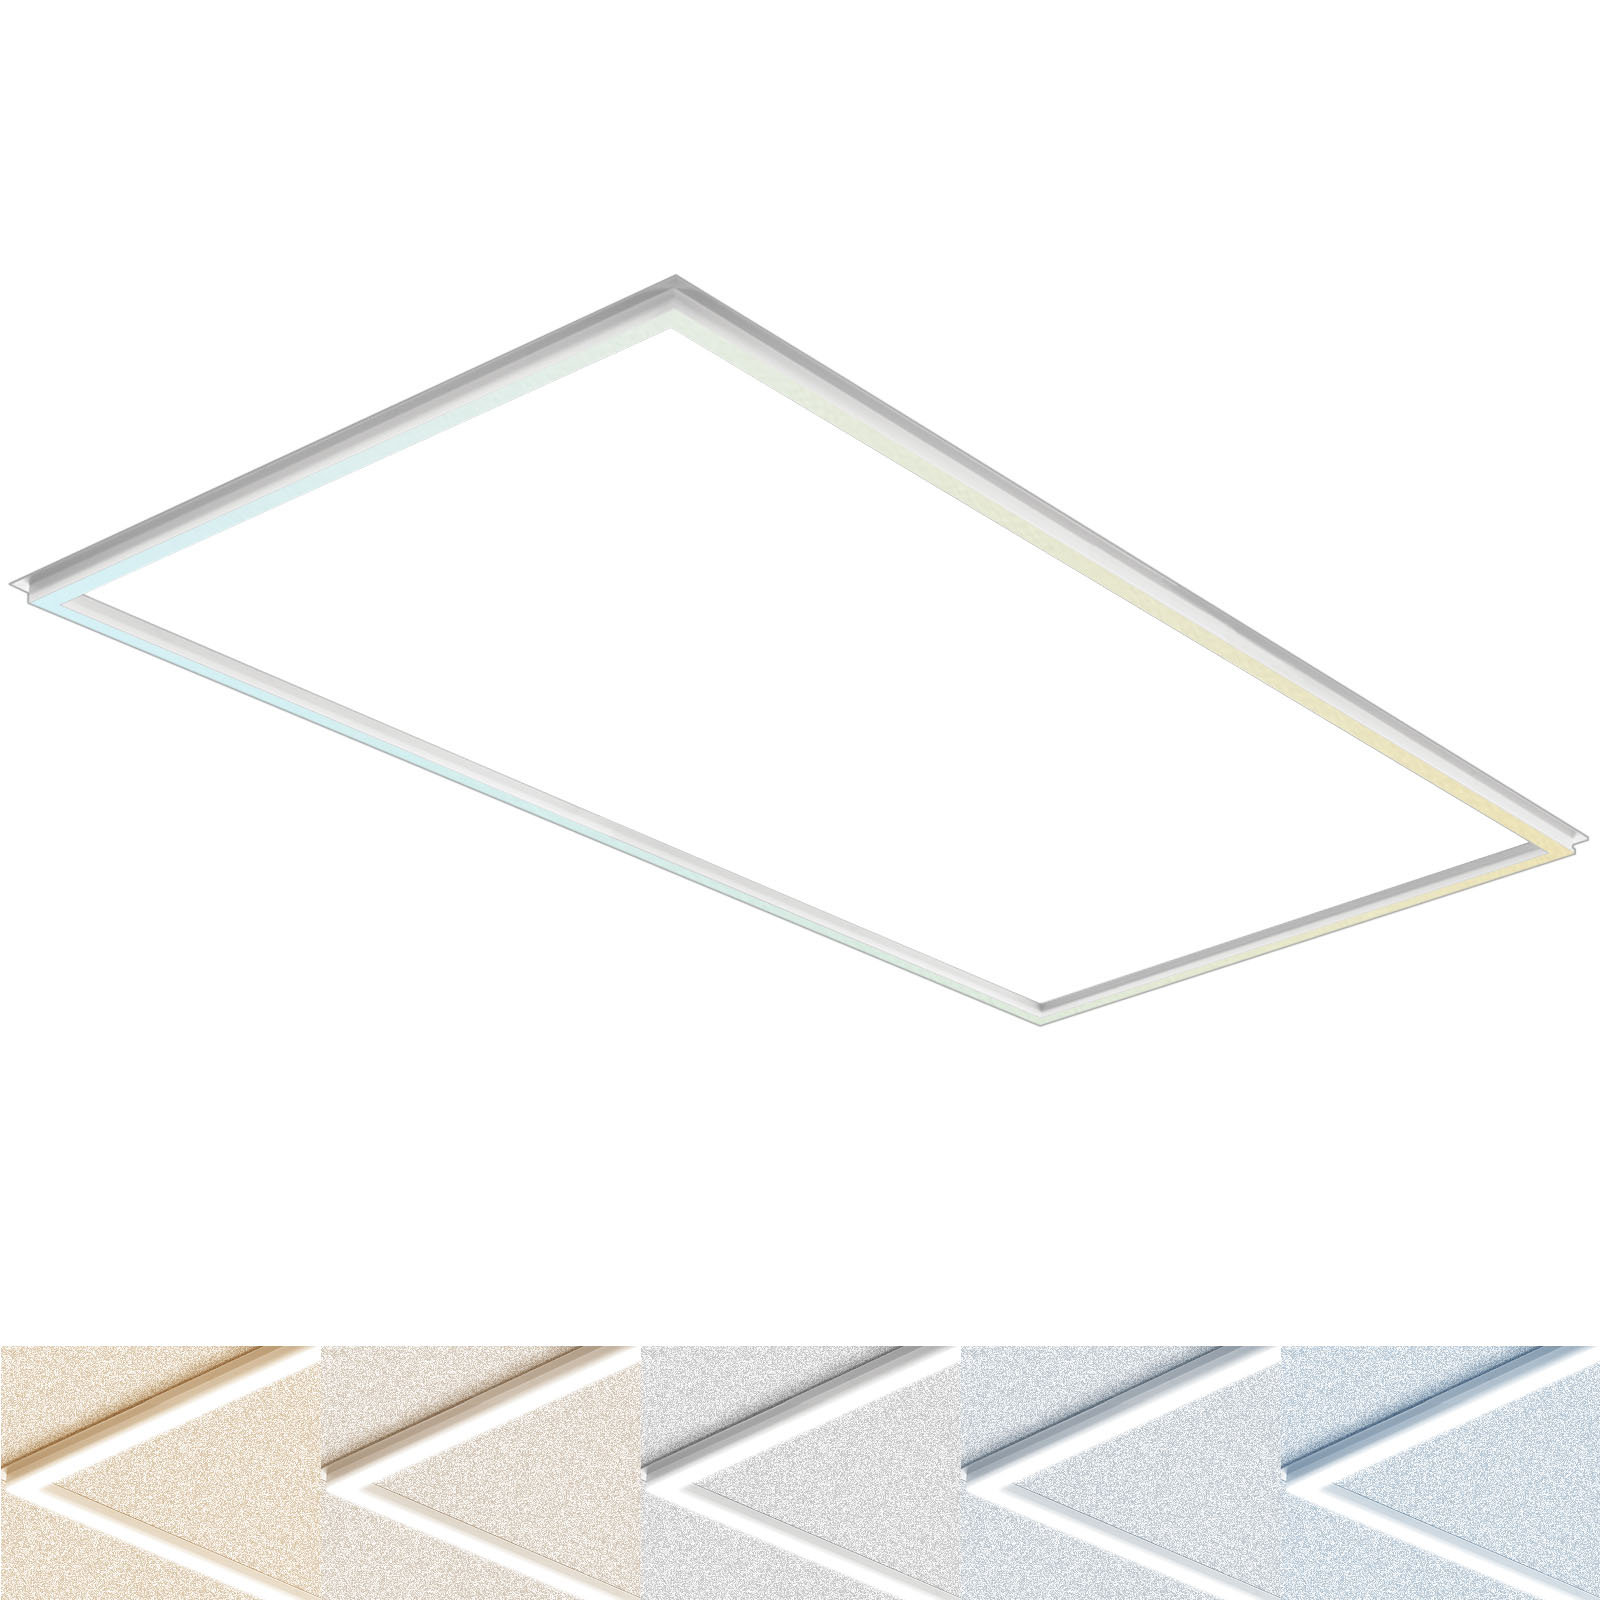 Direct-lit Light Panel LED 60x60 - 40W, Ultraslim LED Panel Light